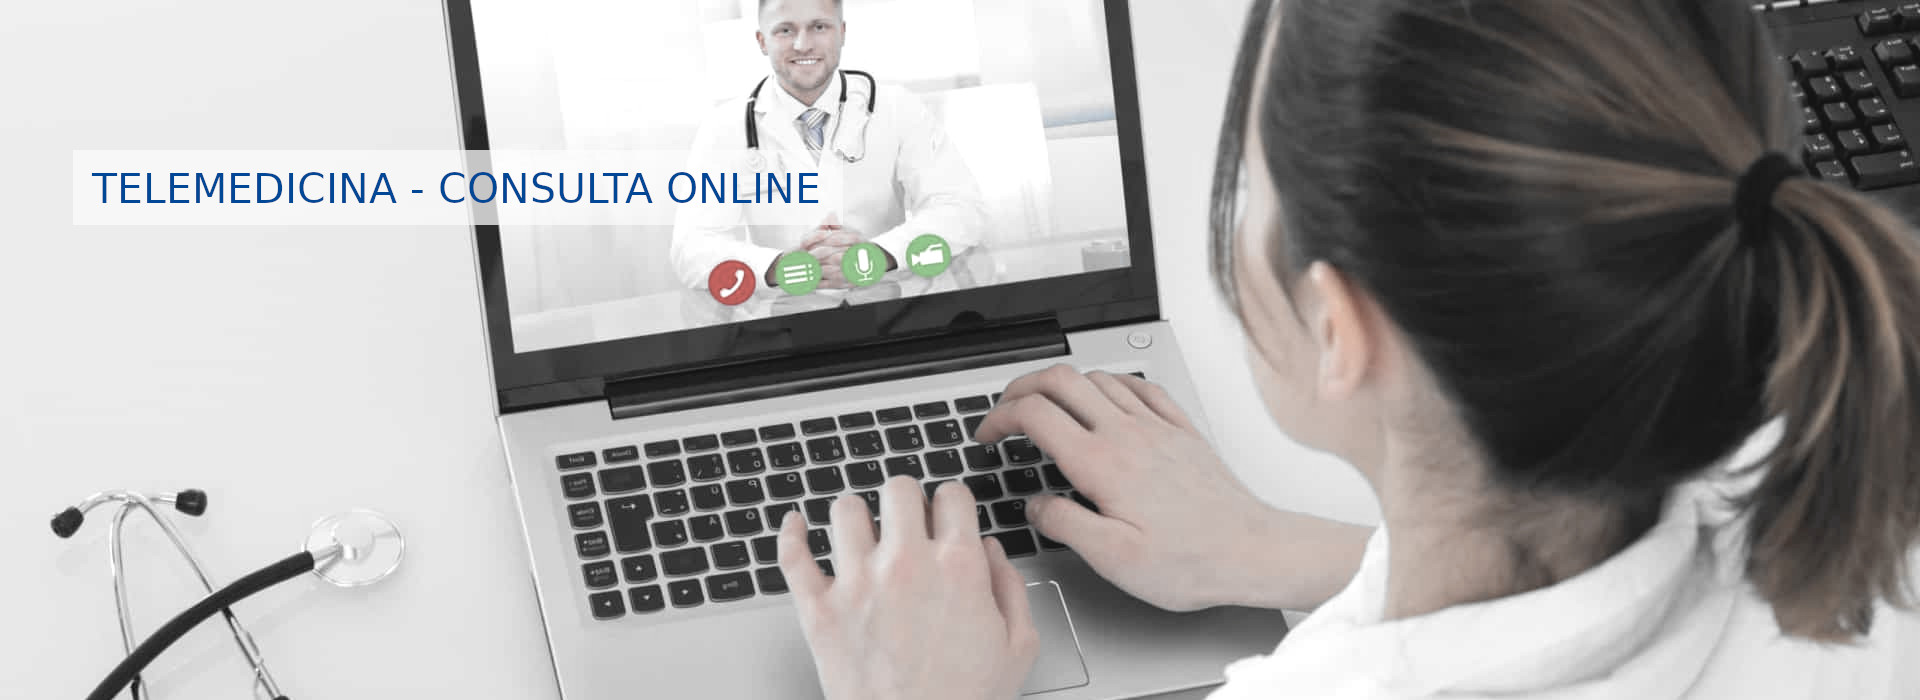 Telemedicina - Consulta Online